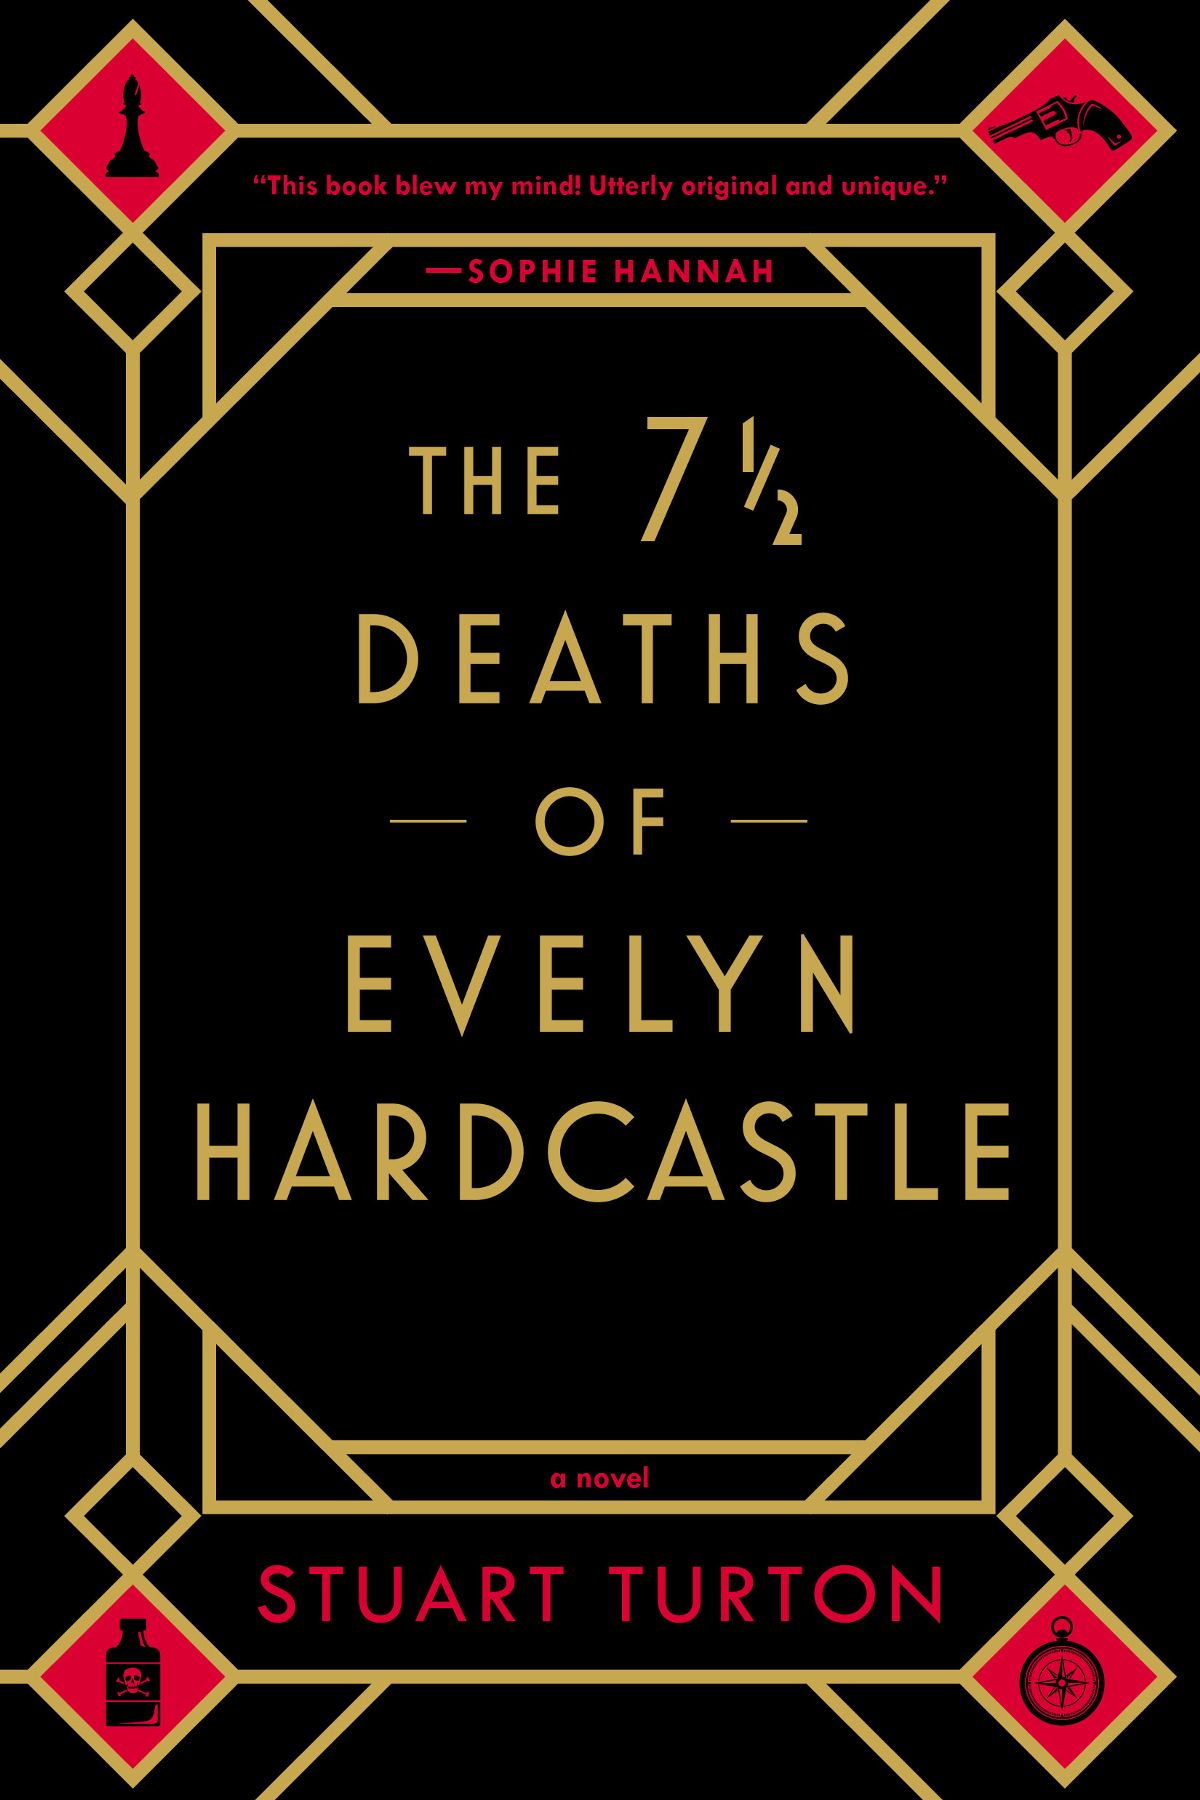 Stuart Turton: The 7 1/2 deaths of Evelyn Hardcastle (AudiobookFormat, 2018)